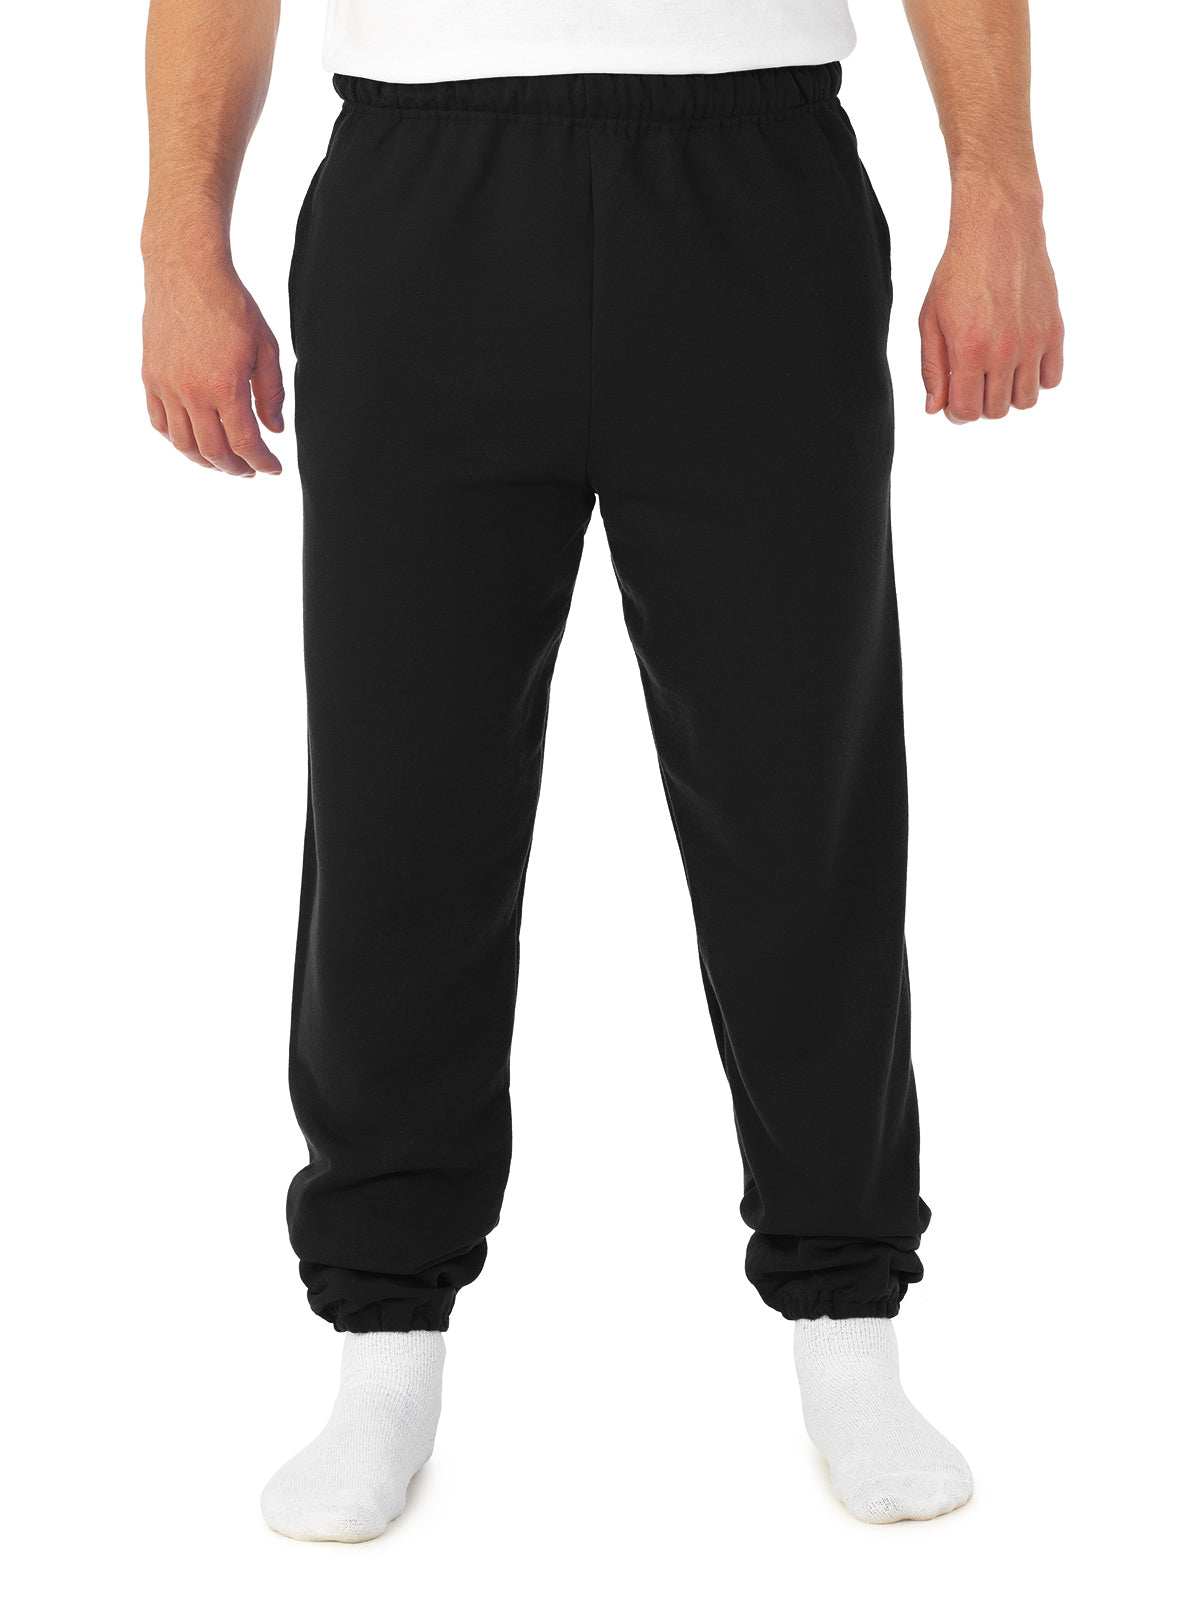 JZ4850MR - Jerzees Mens NuBlend Super Sweats Pocketed Sweatpants